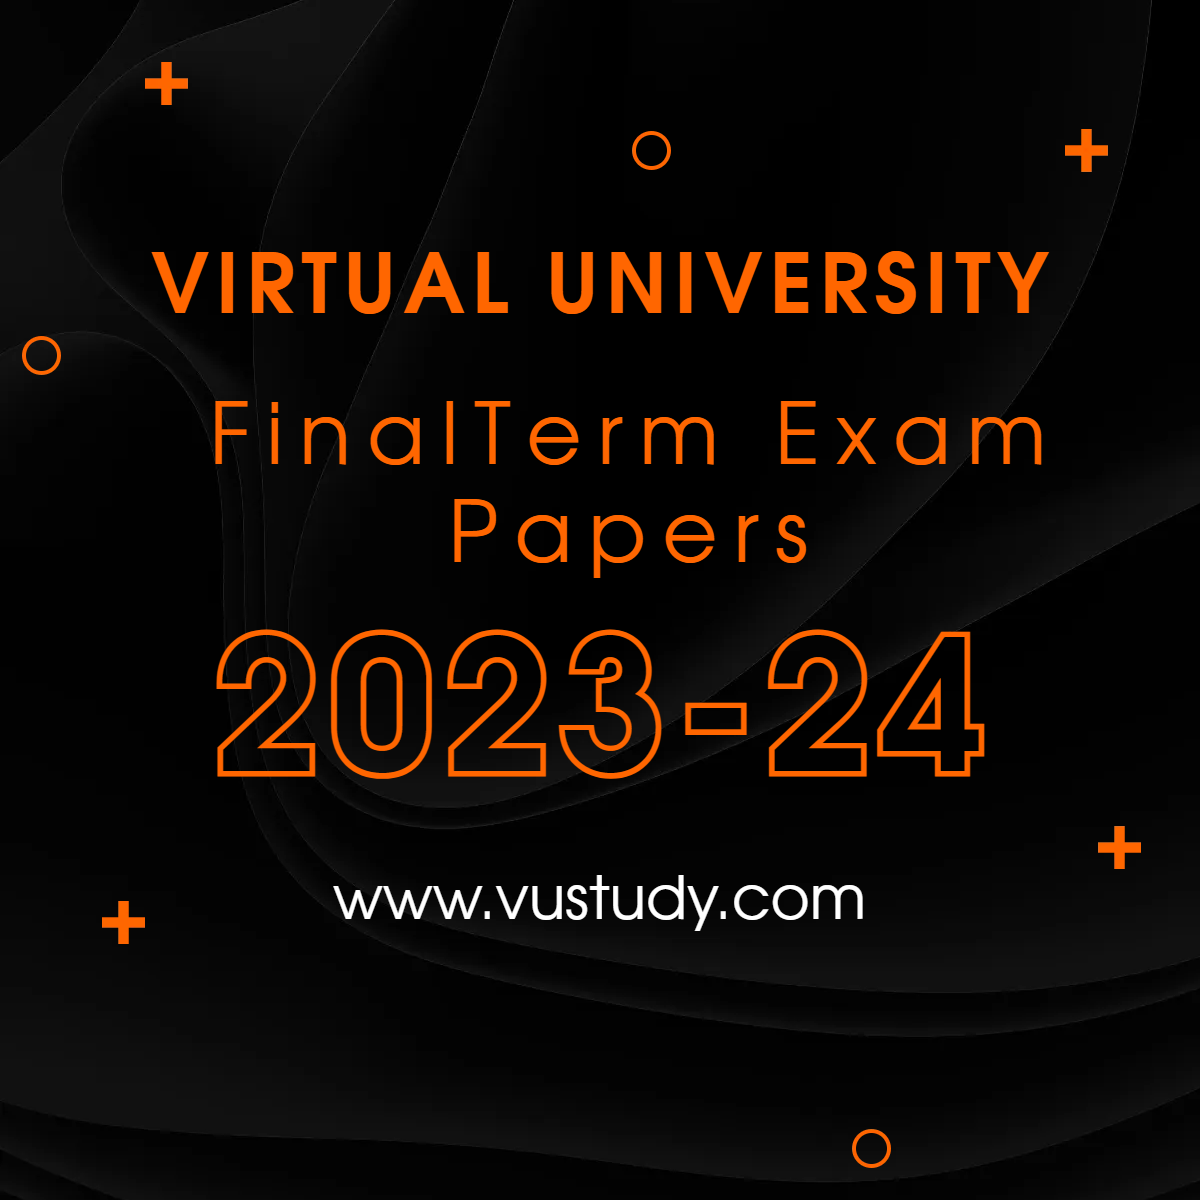 Virtual University Final term Past Papers 2023-24